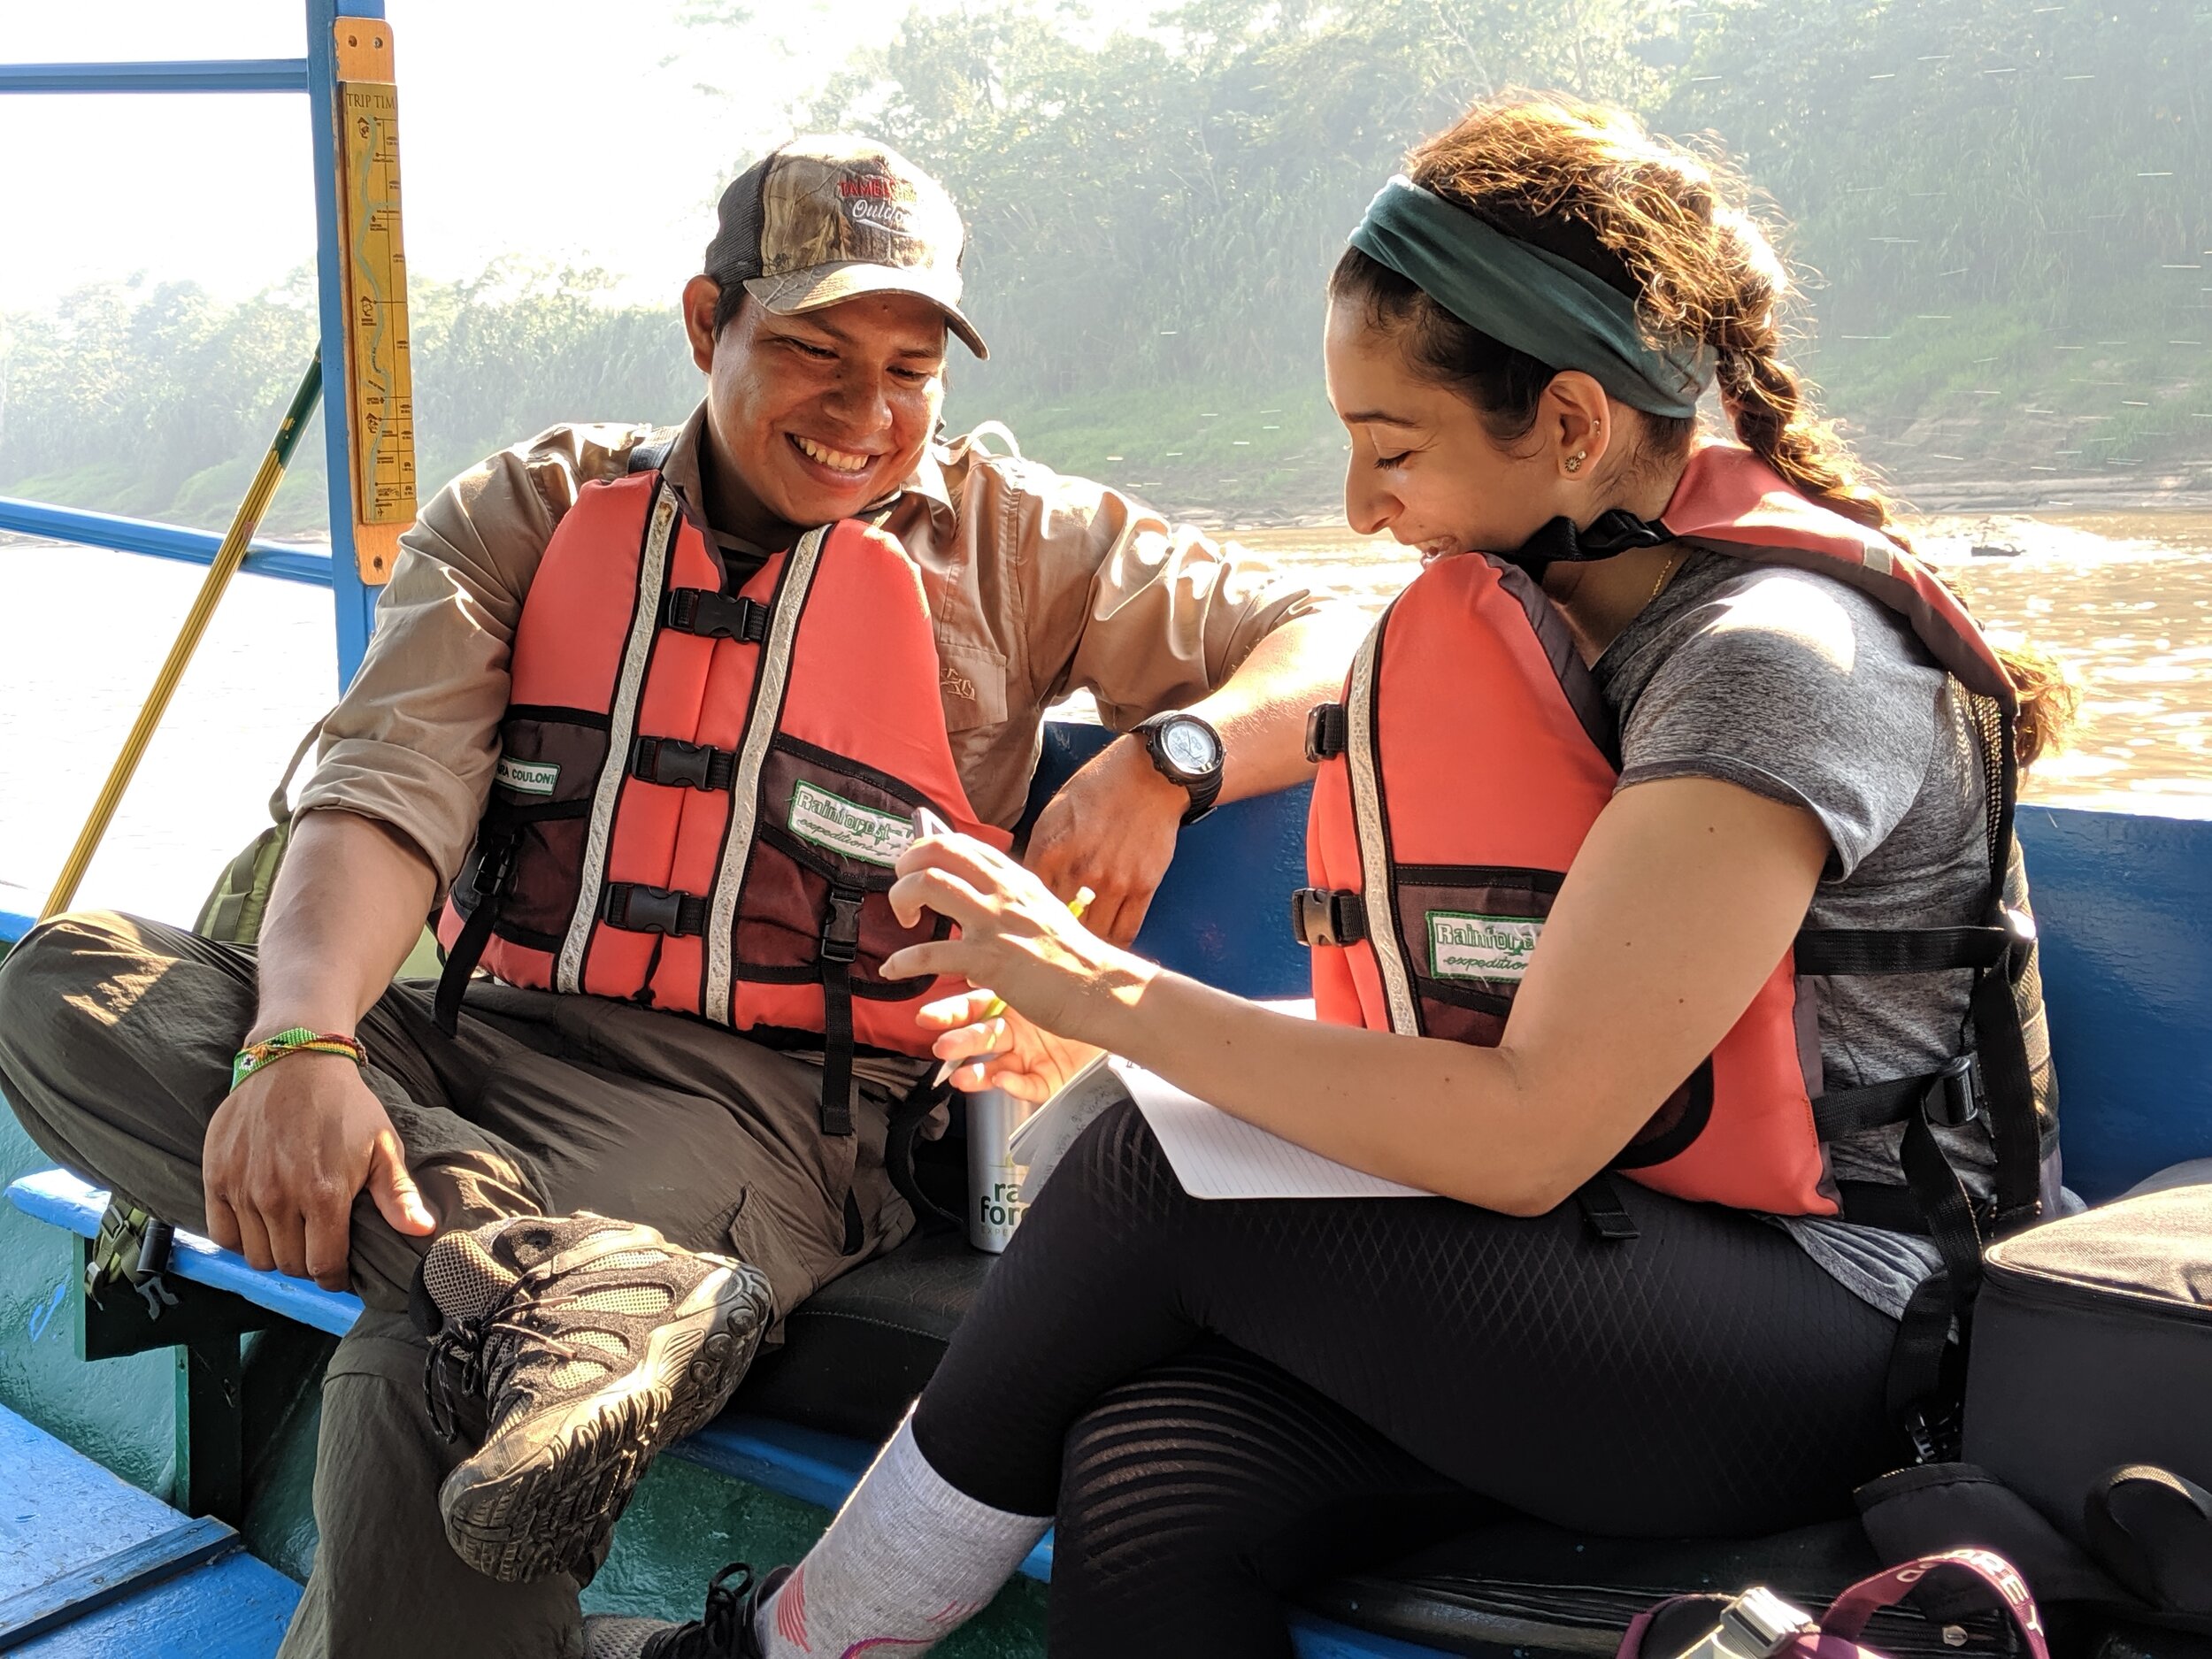 Rasha采访了当地导游Jair Mariche，了解他从事生态旅游的经历。